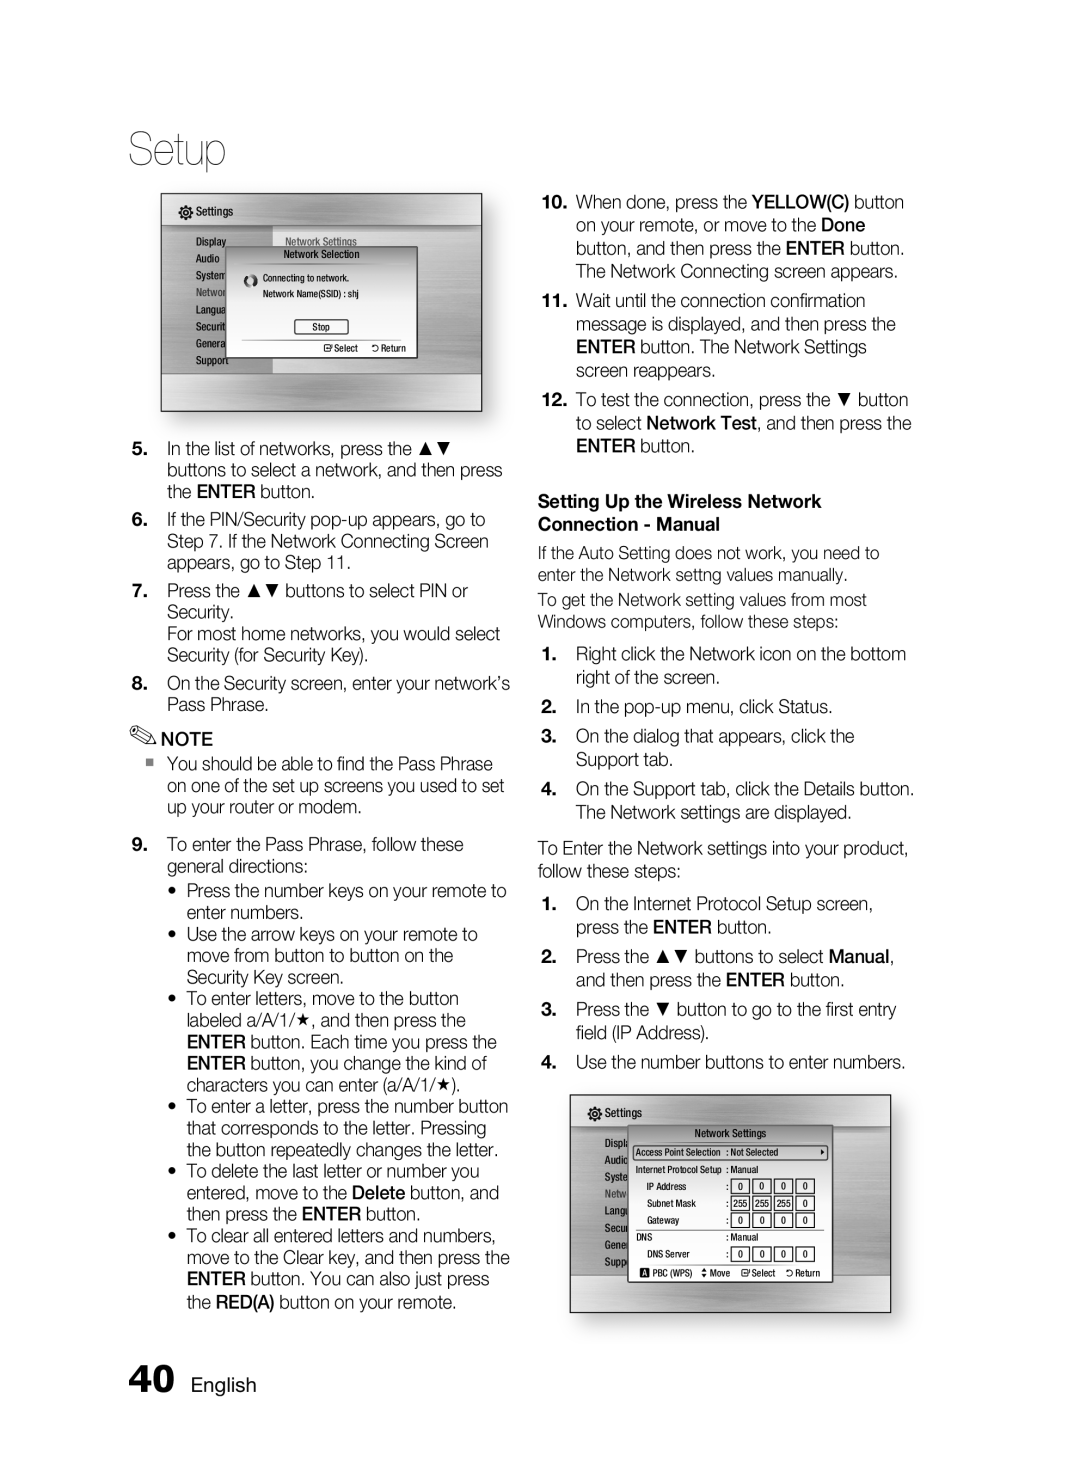 Samsung AH68-02255S, HT-C6530 user manual English, Setup 